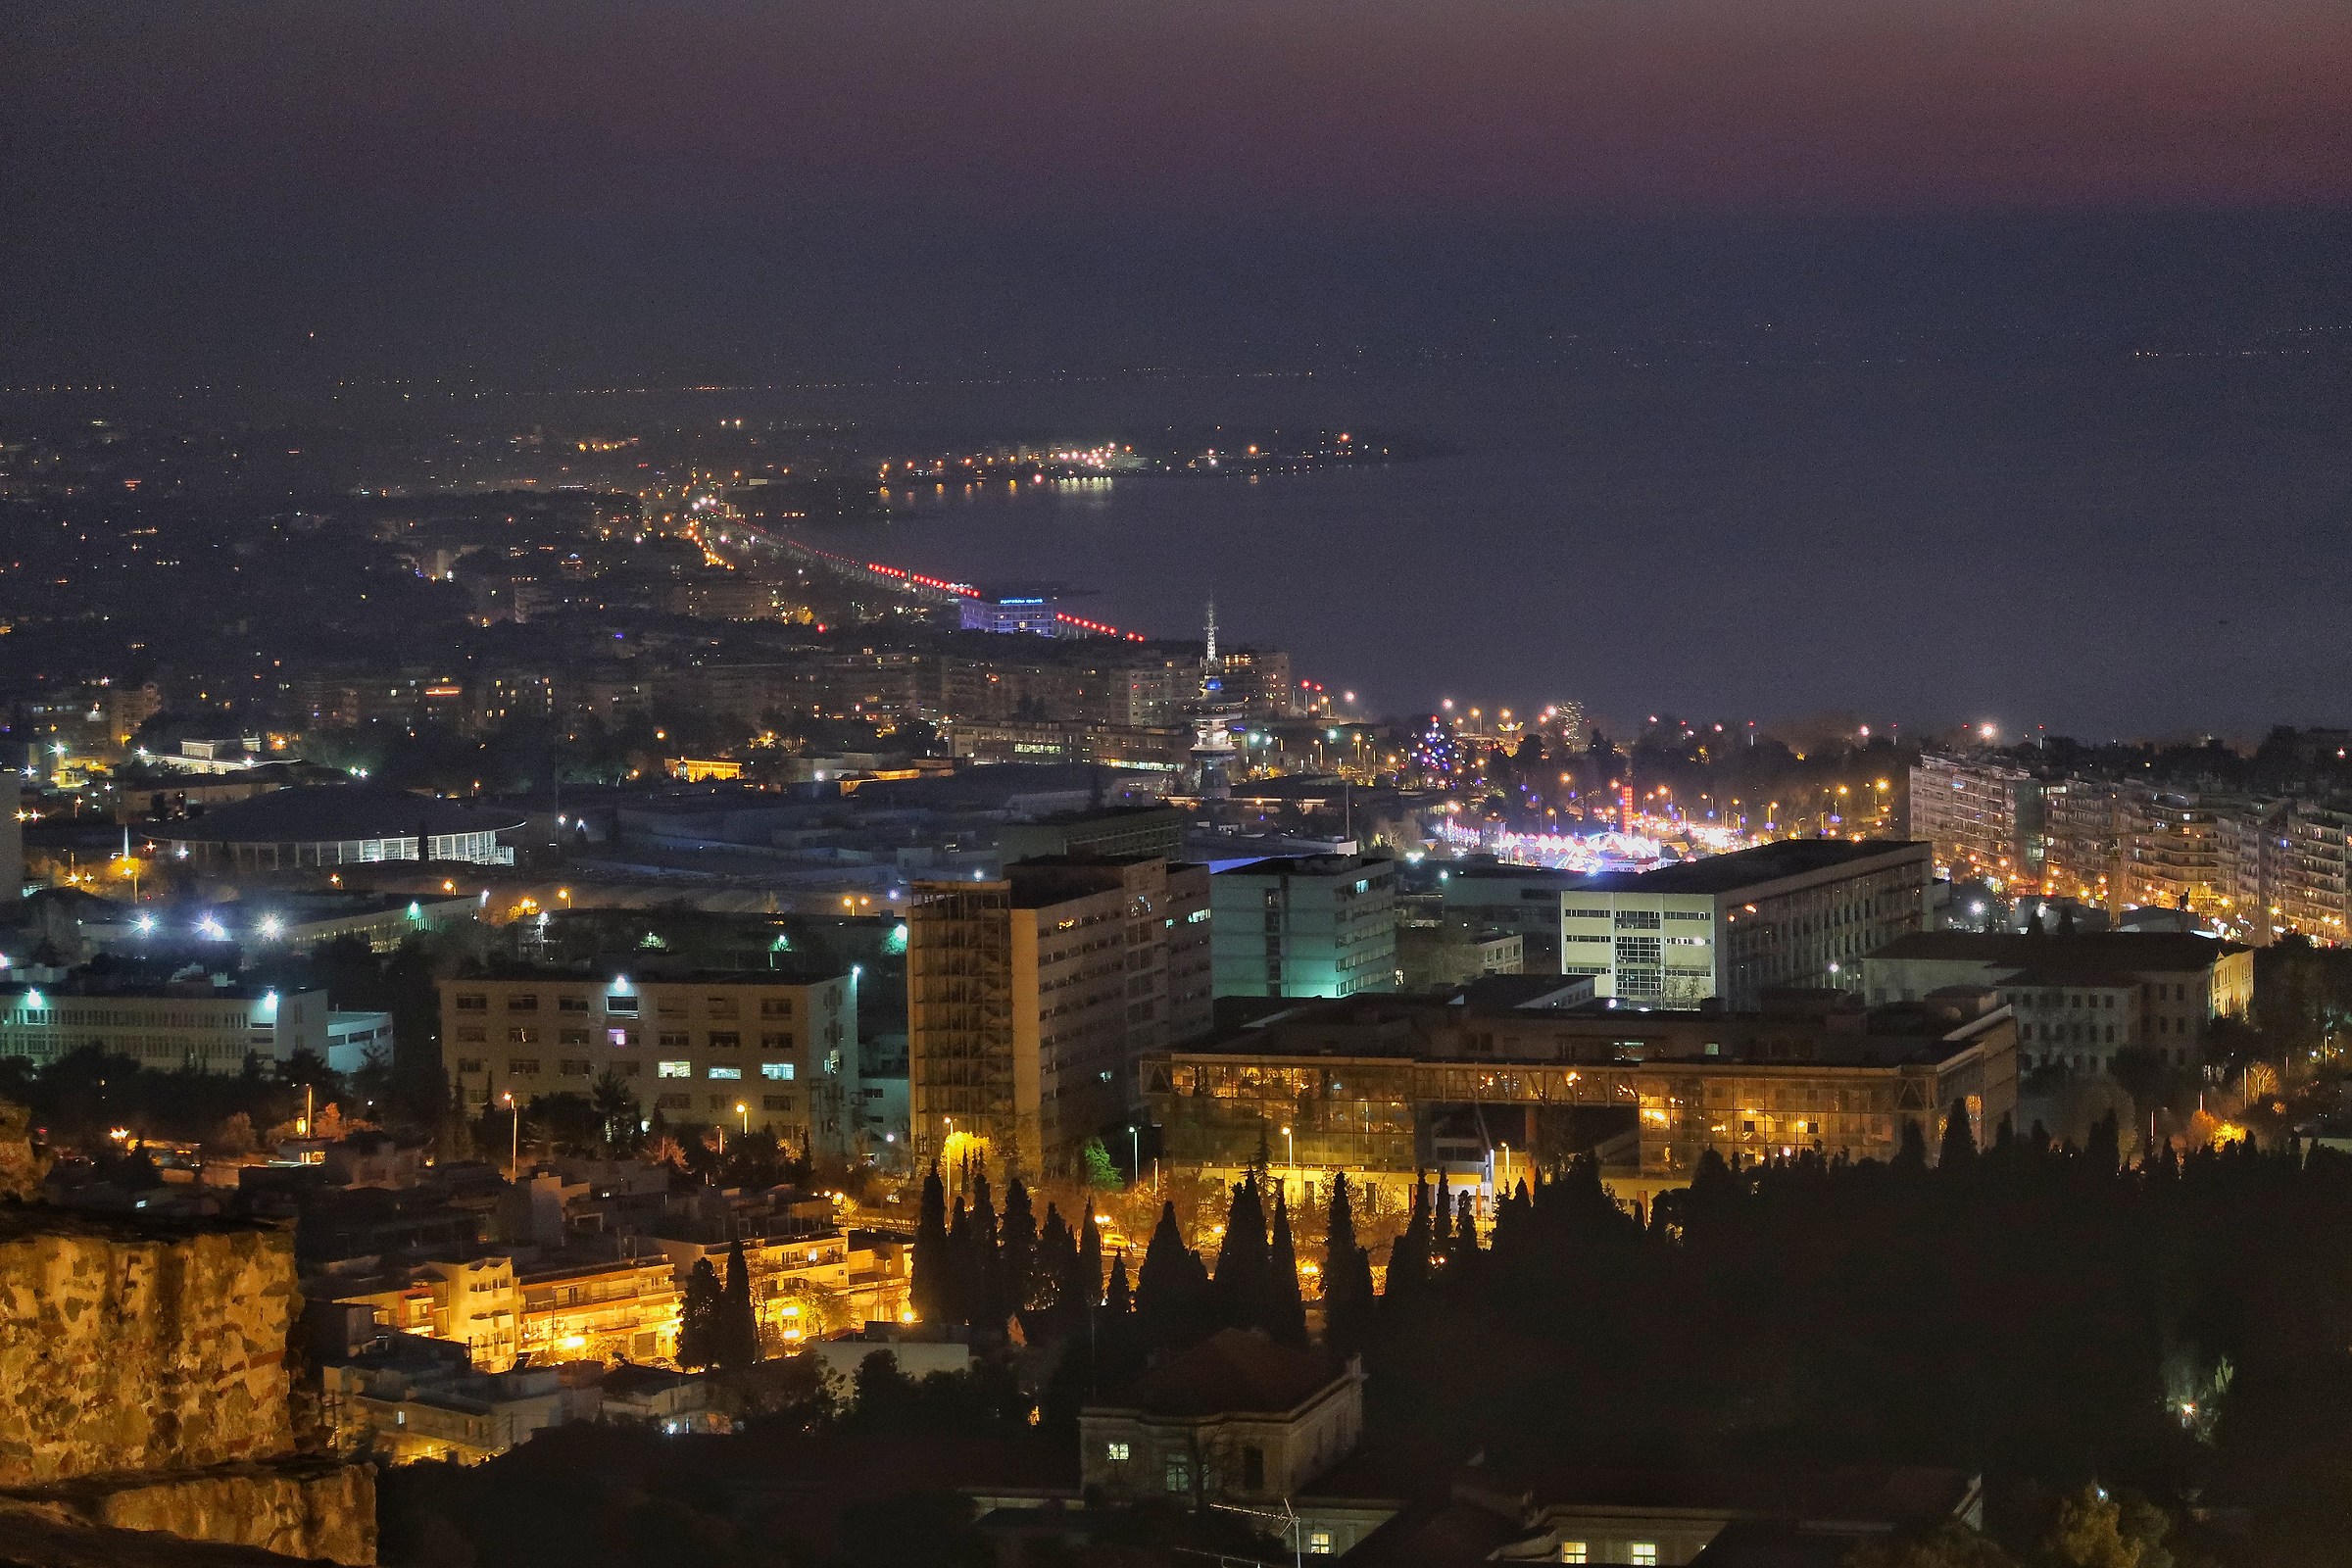 Salonicco by night...